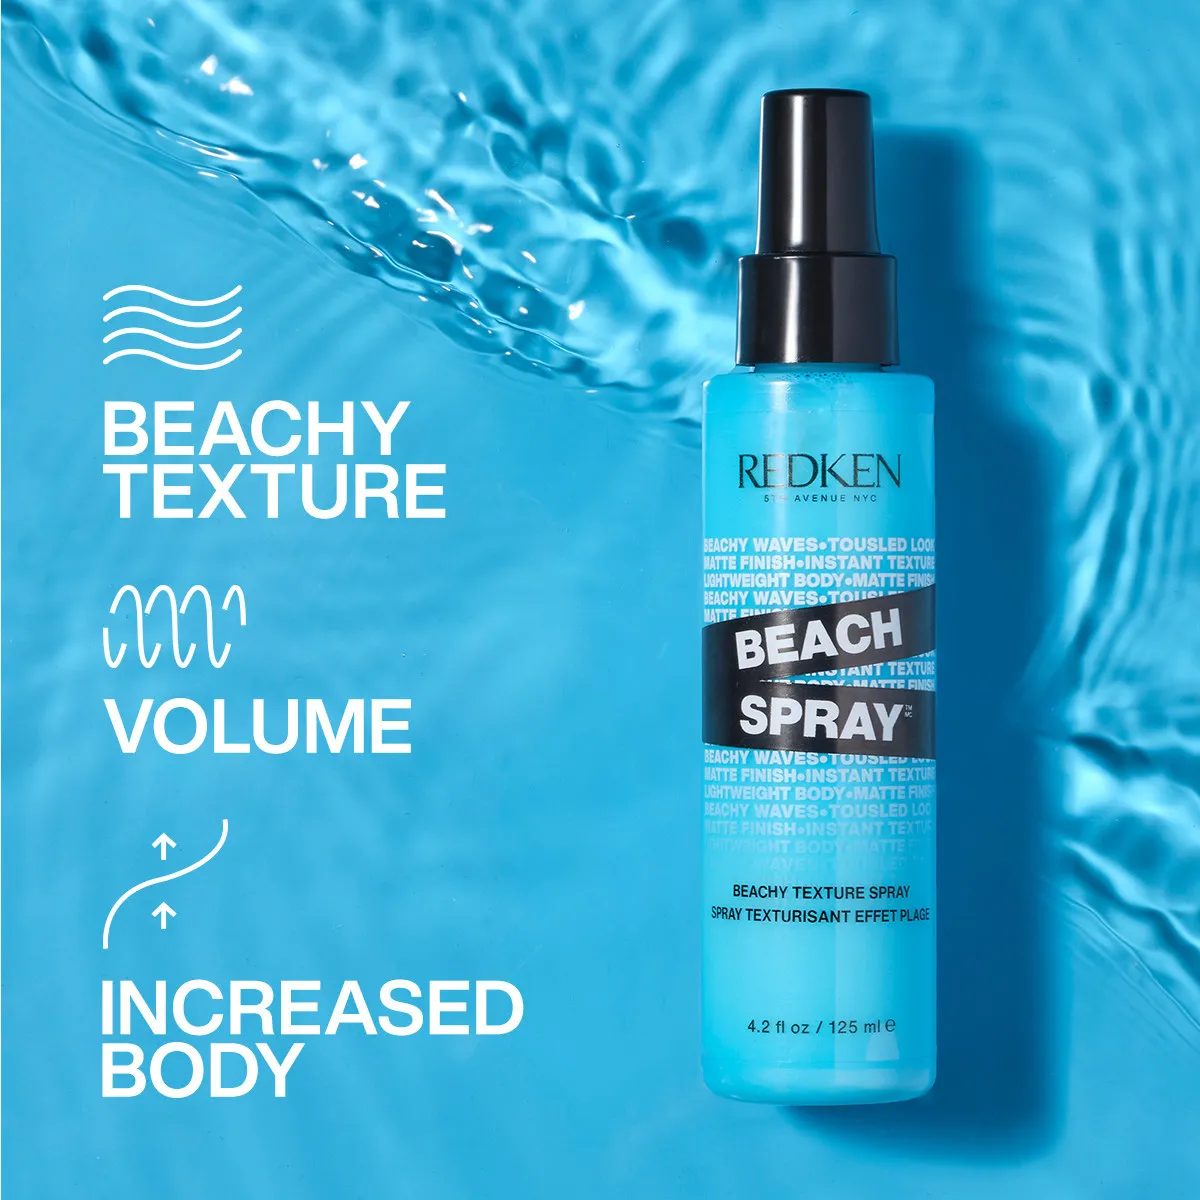 Redken Beach Texture Spray